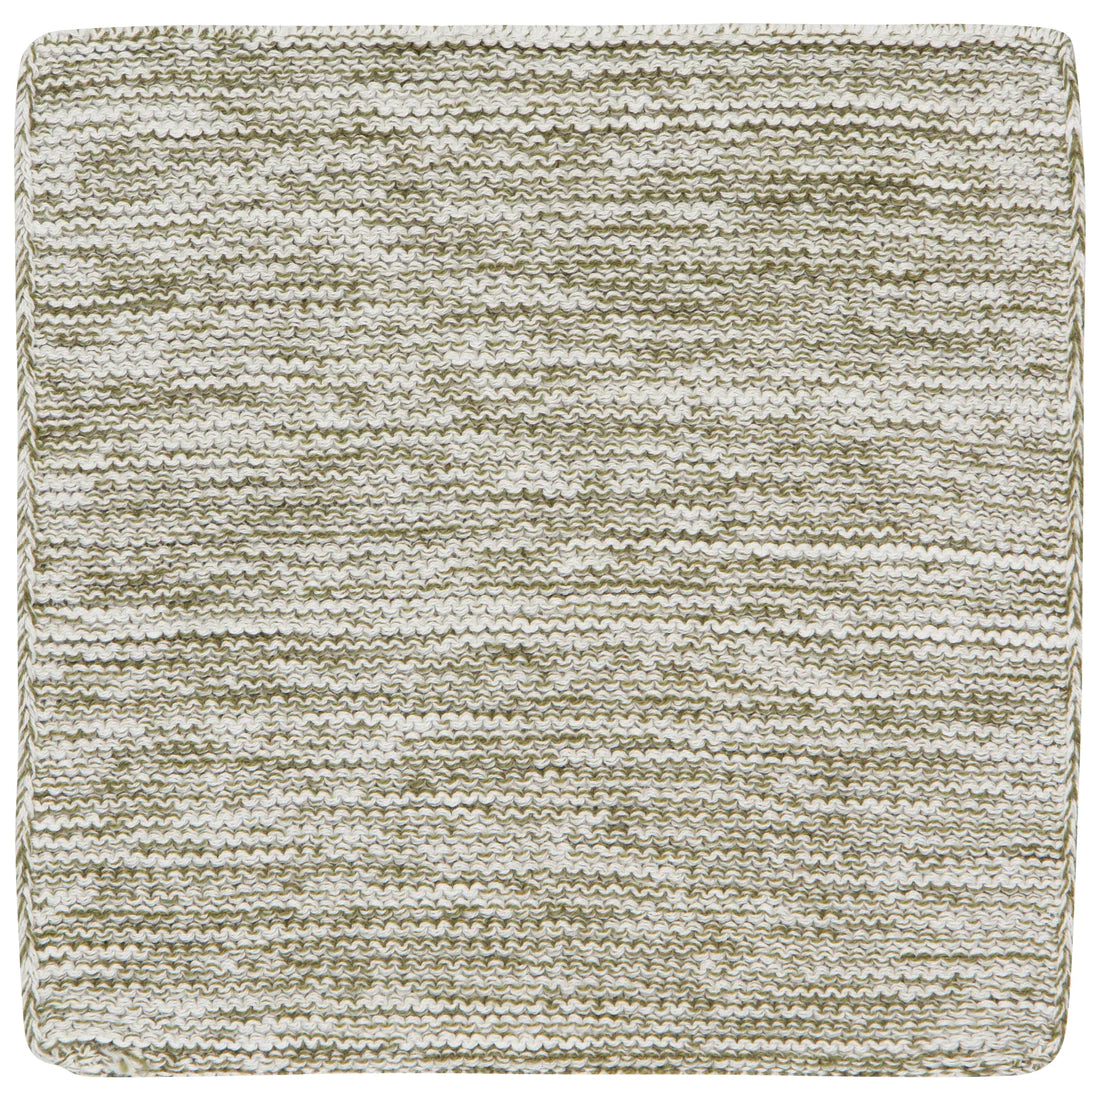 Handmade Cotton Knit Dishcloths - Set of 2 Olive